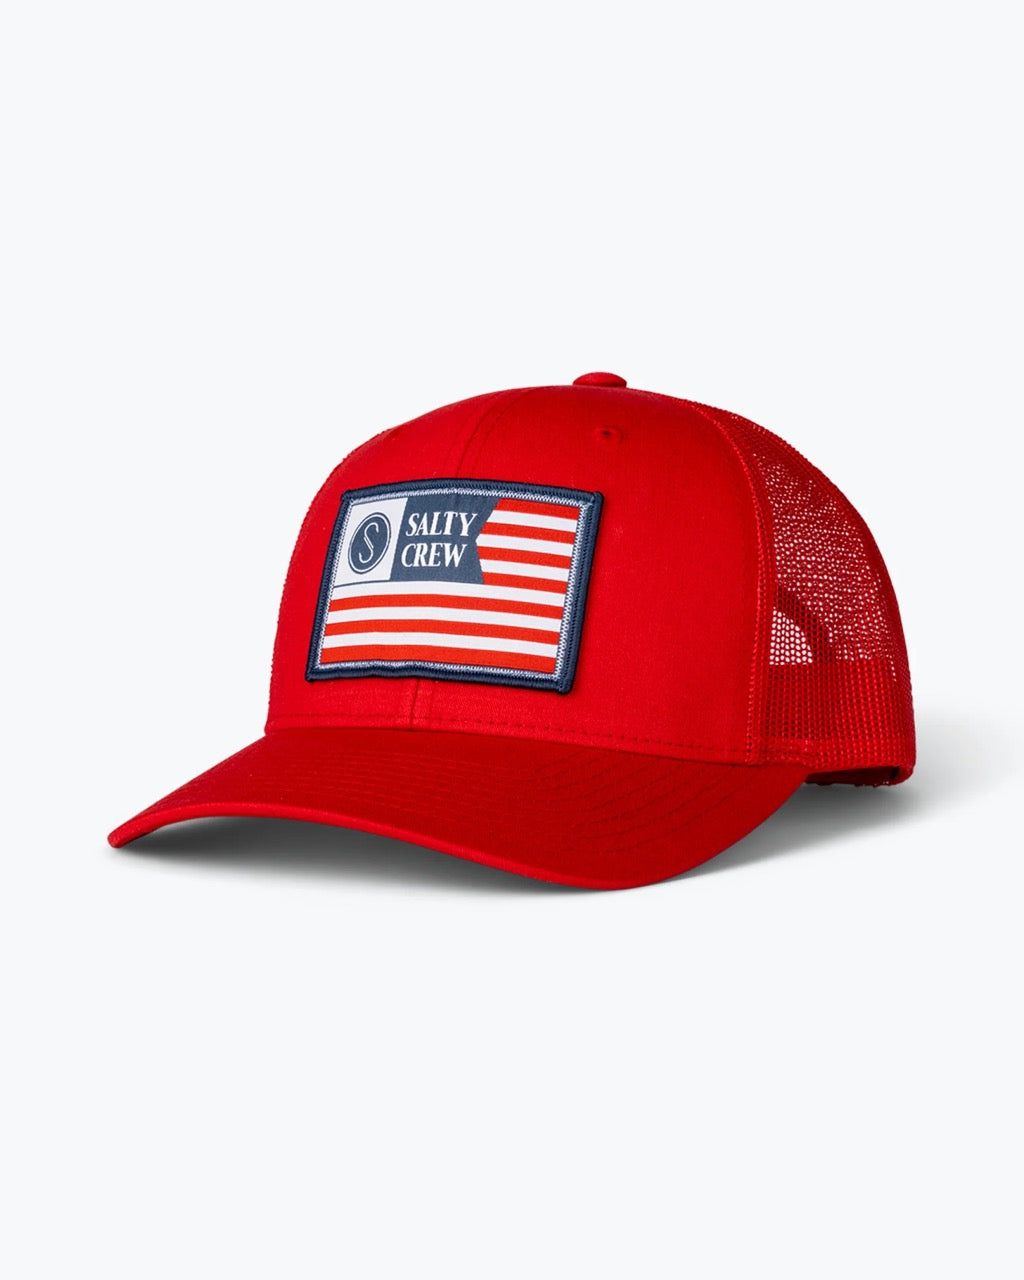 Salty Crew - Freedom Flag Retro Trucker Hat